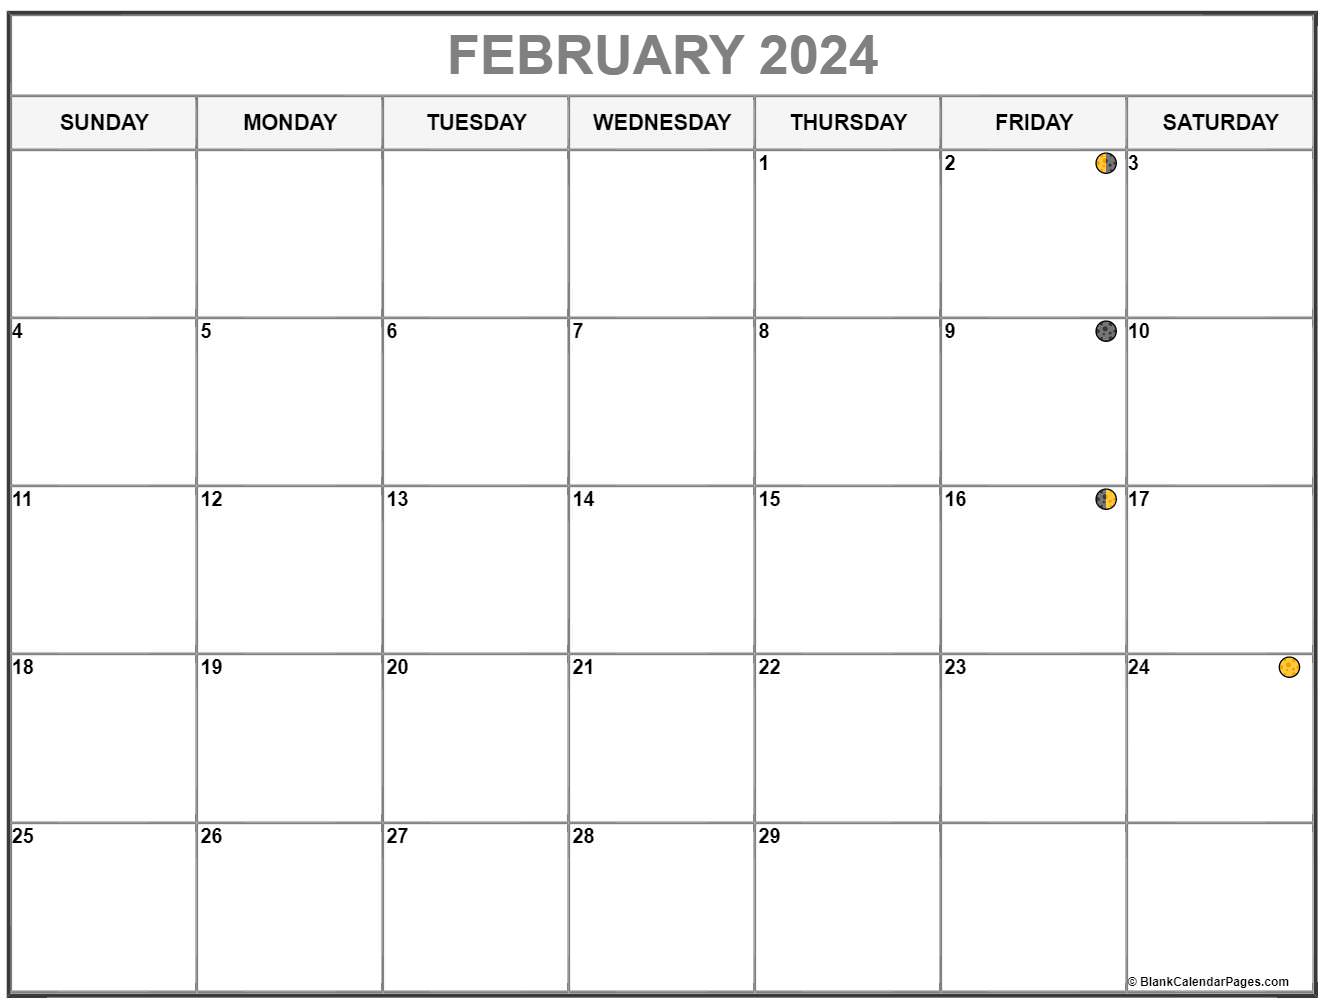 Moon Phase Calendar July 2022 February 2022 Lunar Calendar | Moon Phase Calendar